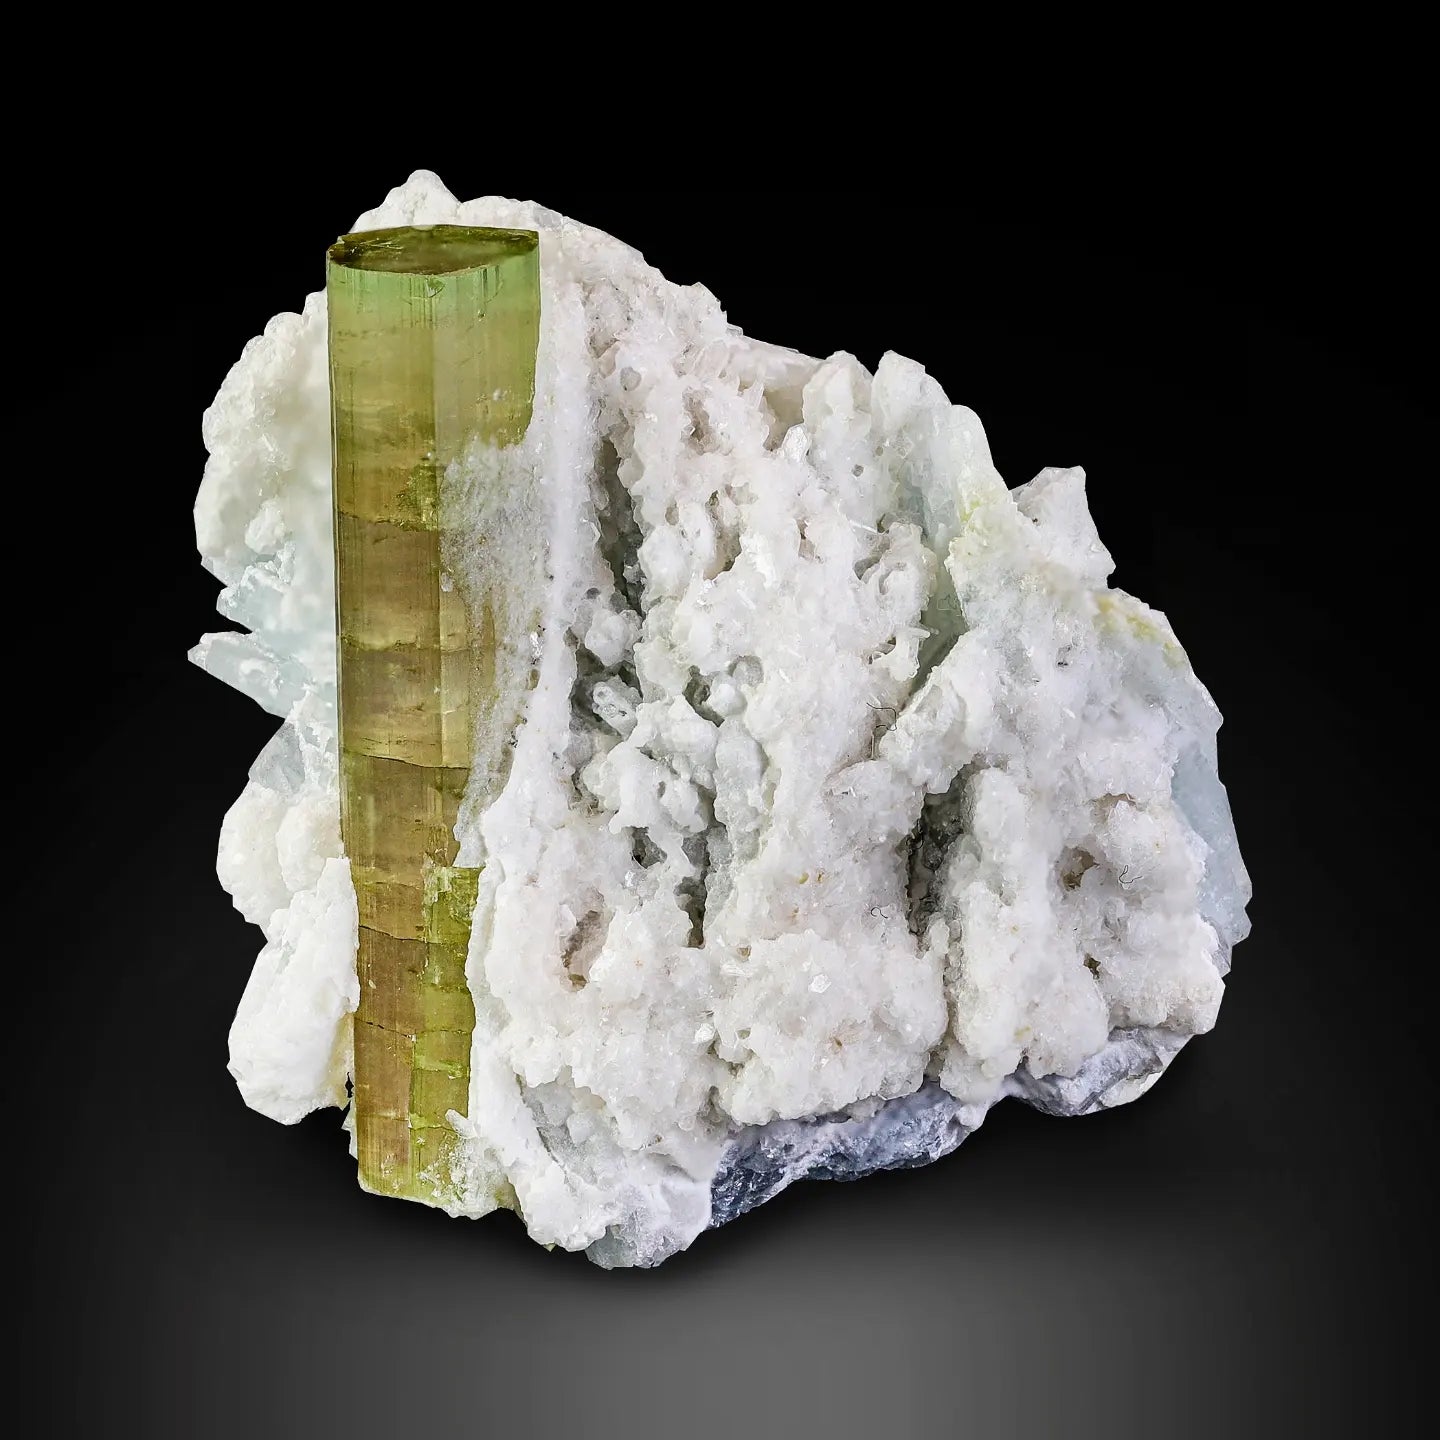 Remarkable Single Green Tourmaline Crystal on Bluish Cleavelandite Matrix from Afghanistan